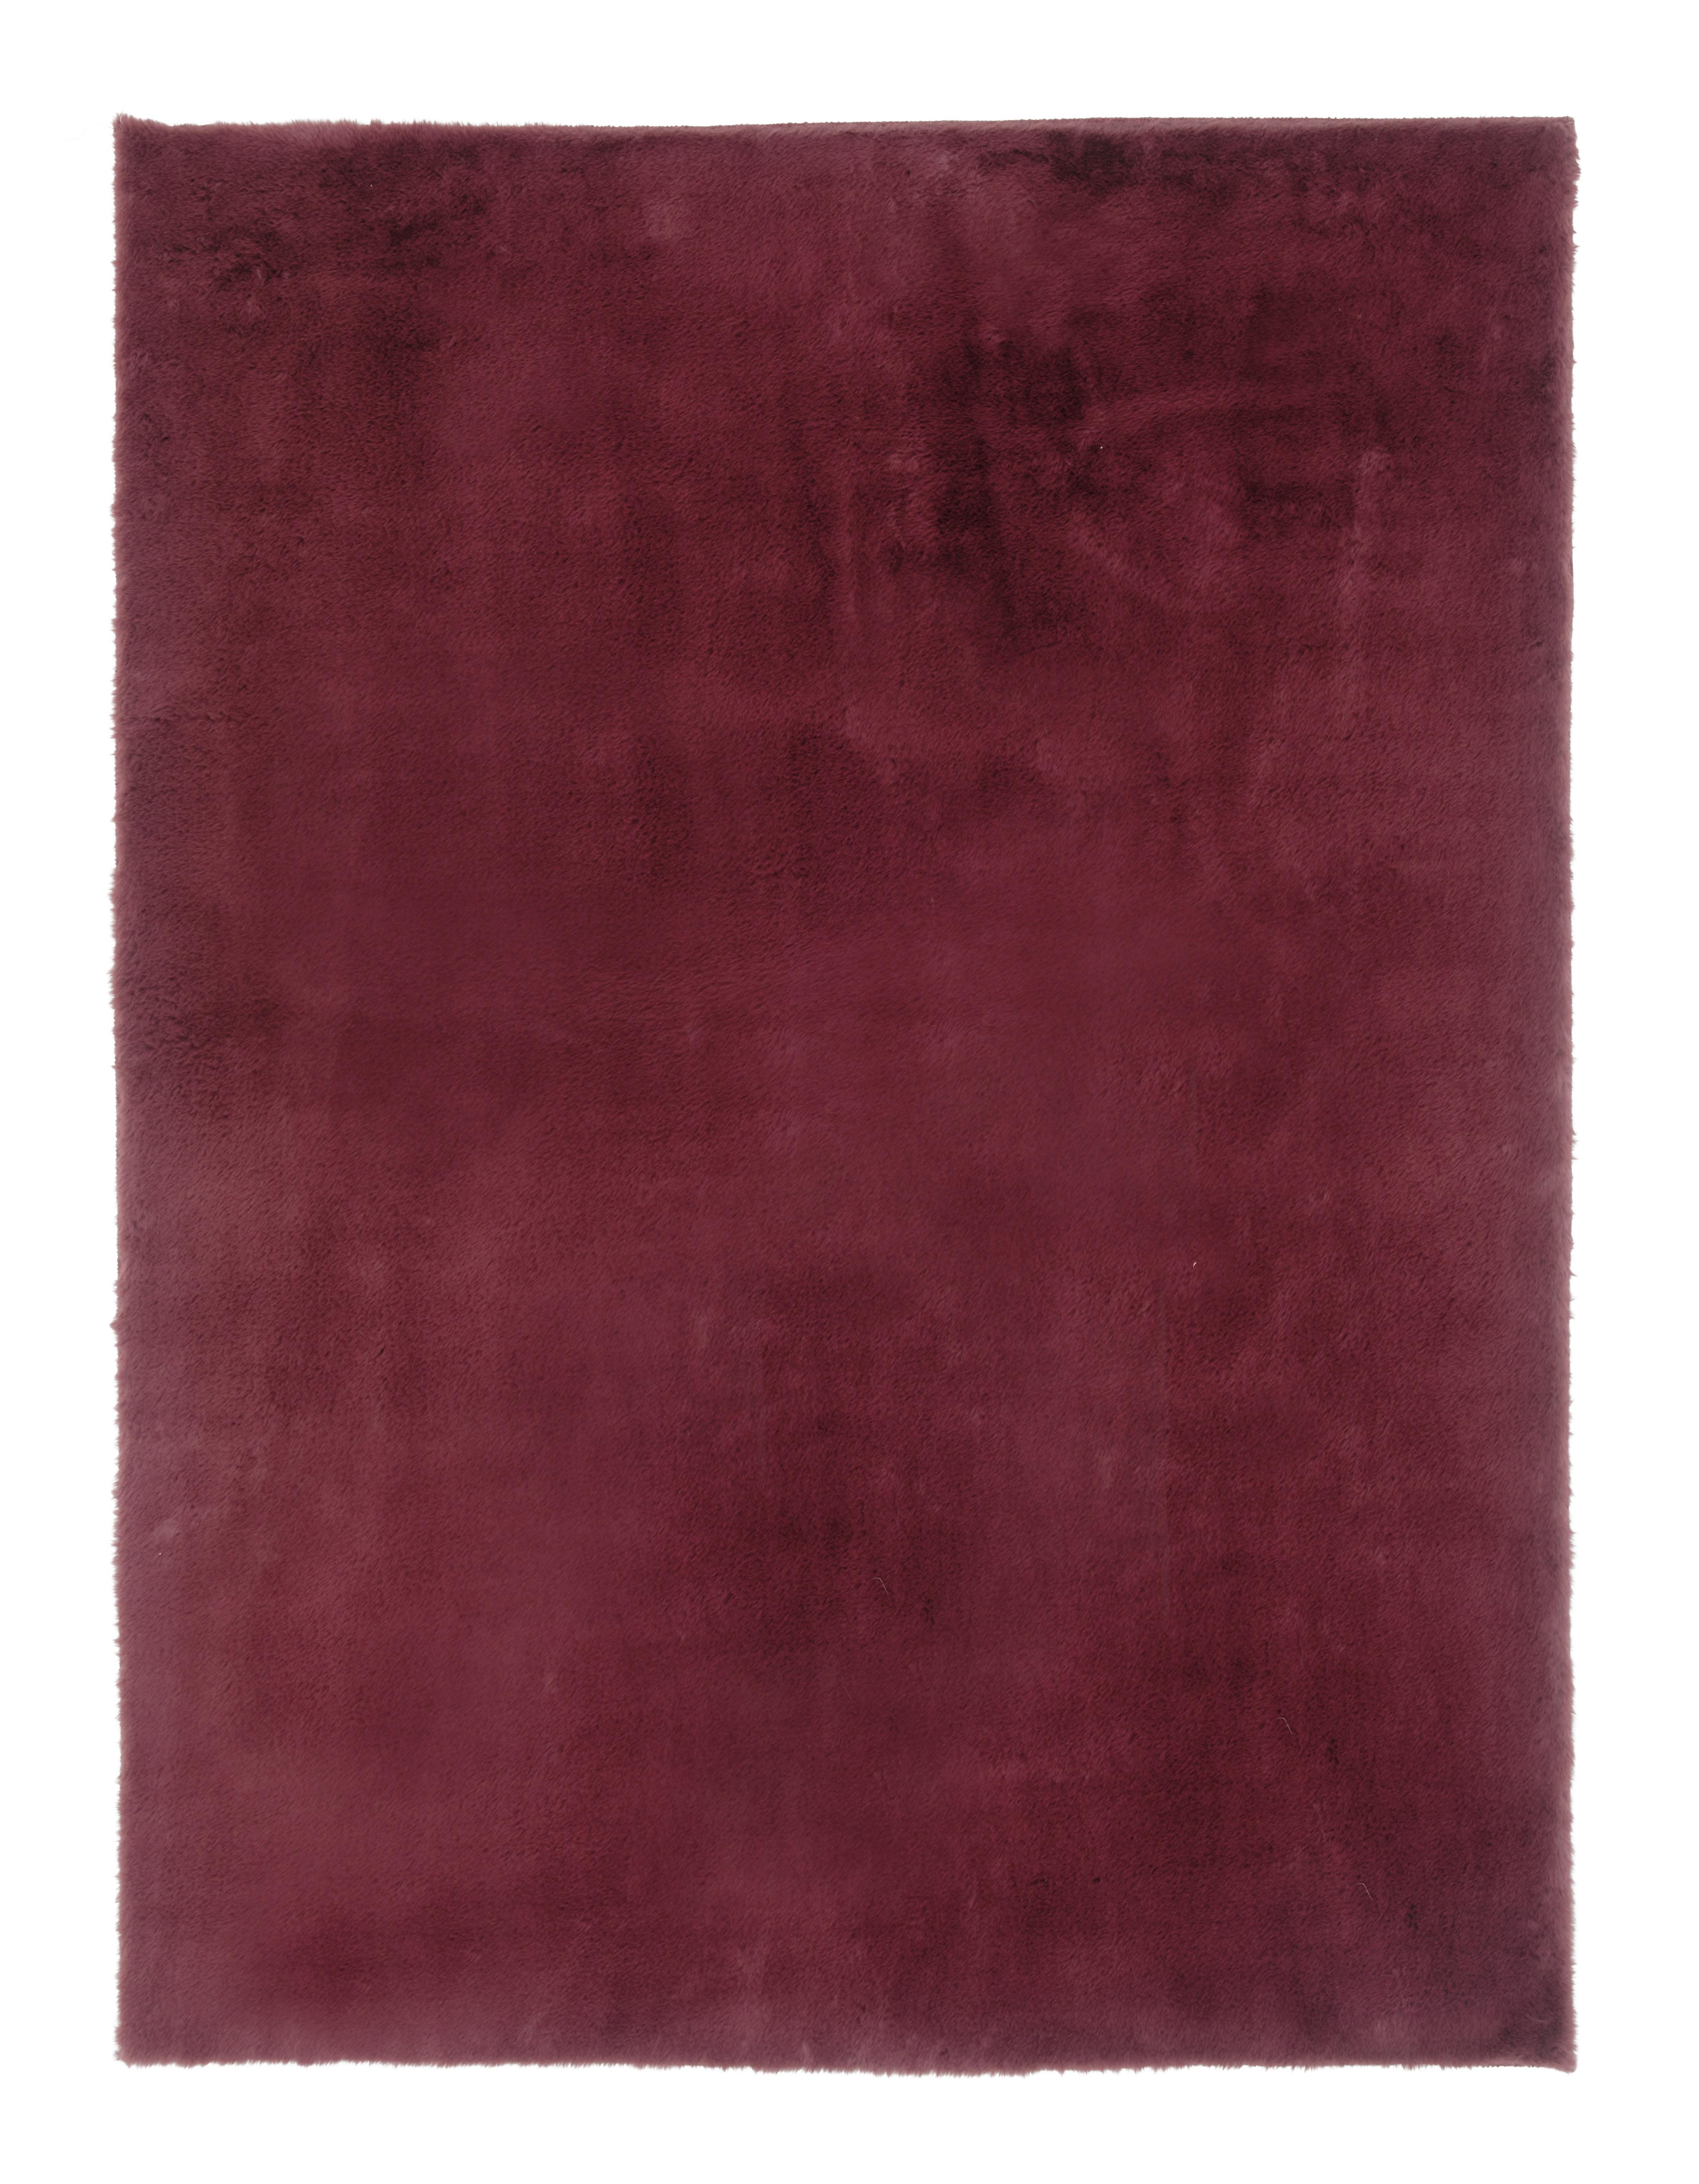 Umelá Kožušina Caroline, 80/150cm, Bobuľová - bobuľová, textil (80/150cm) - Modern Living